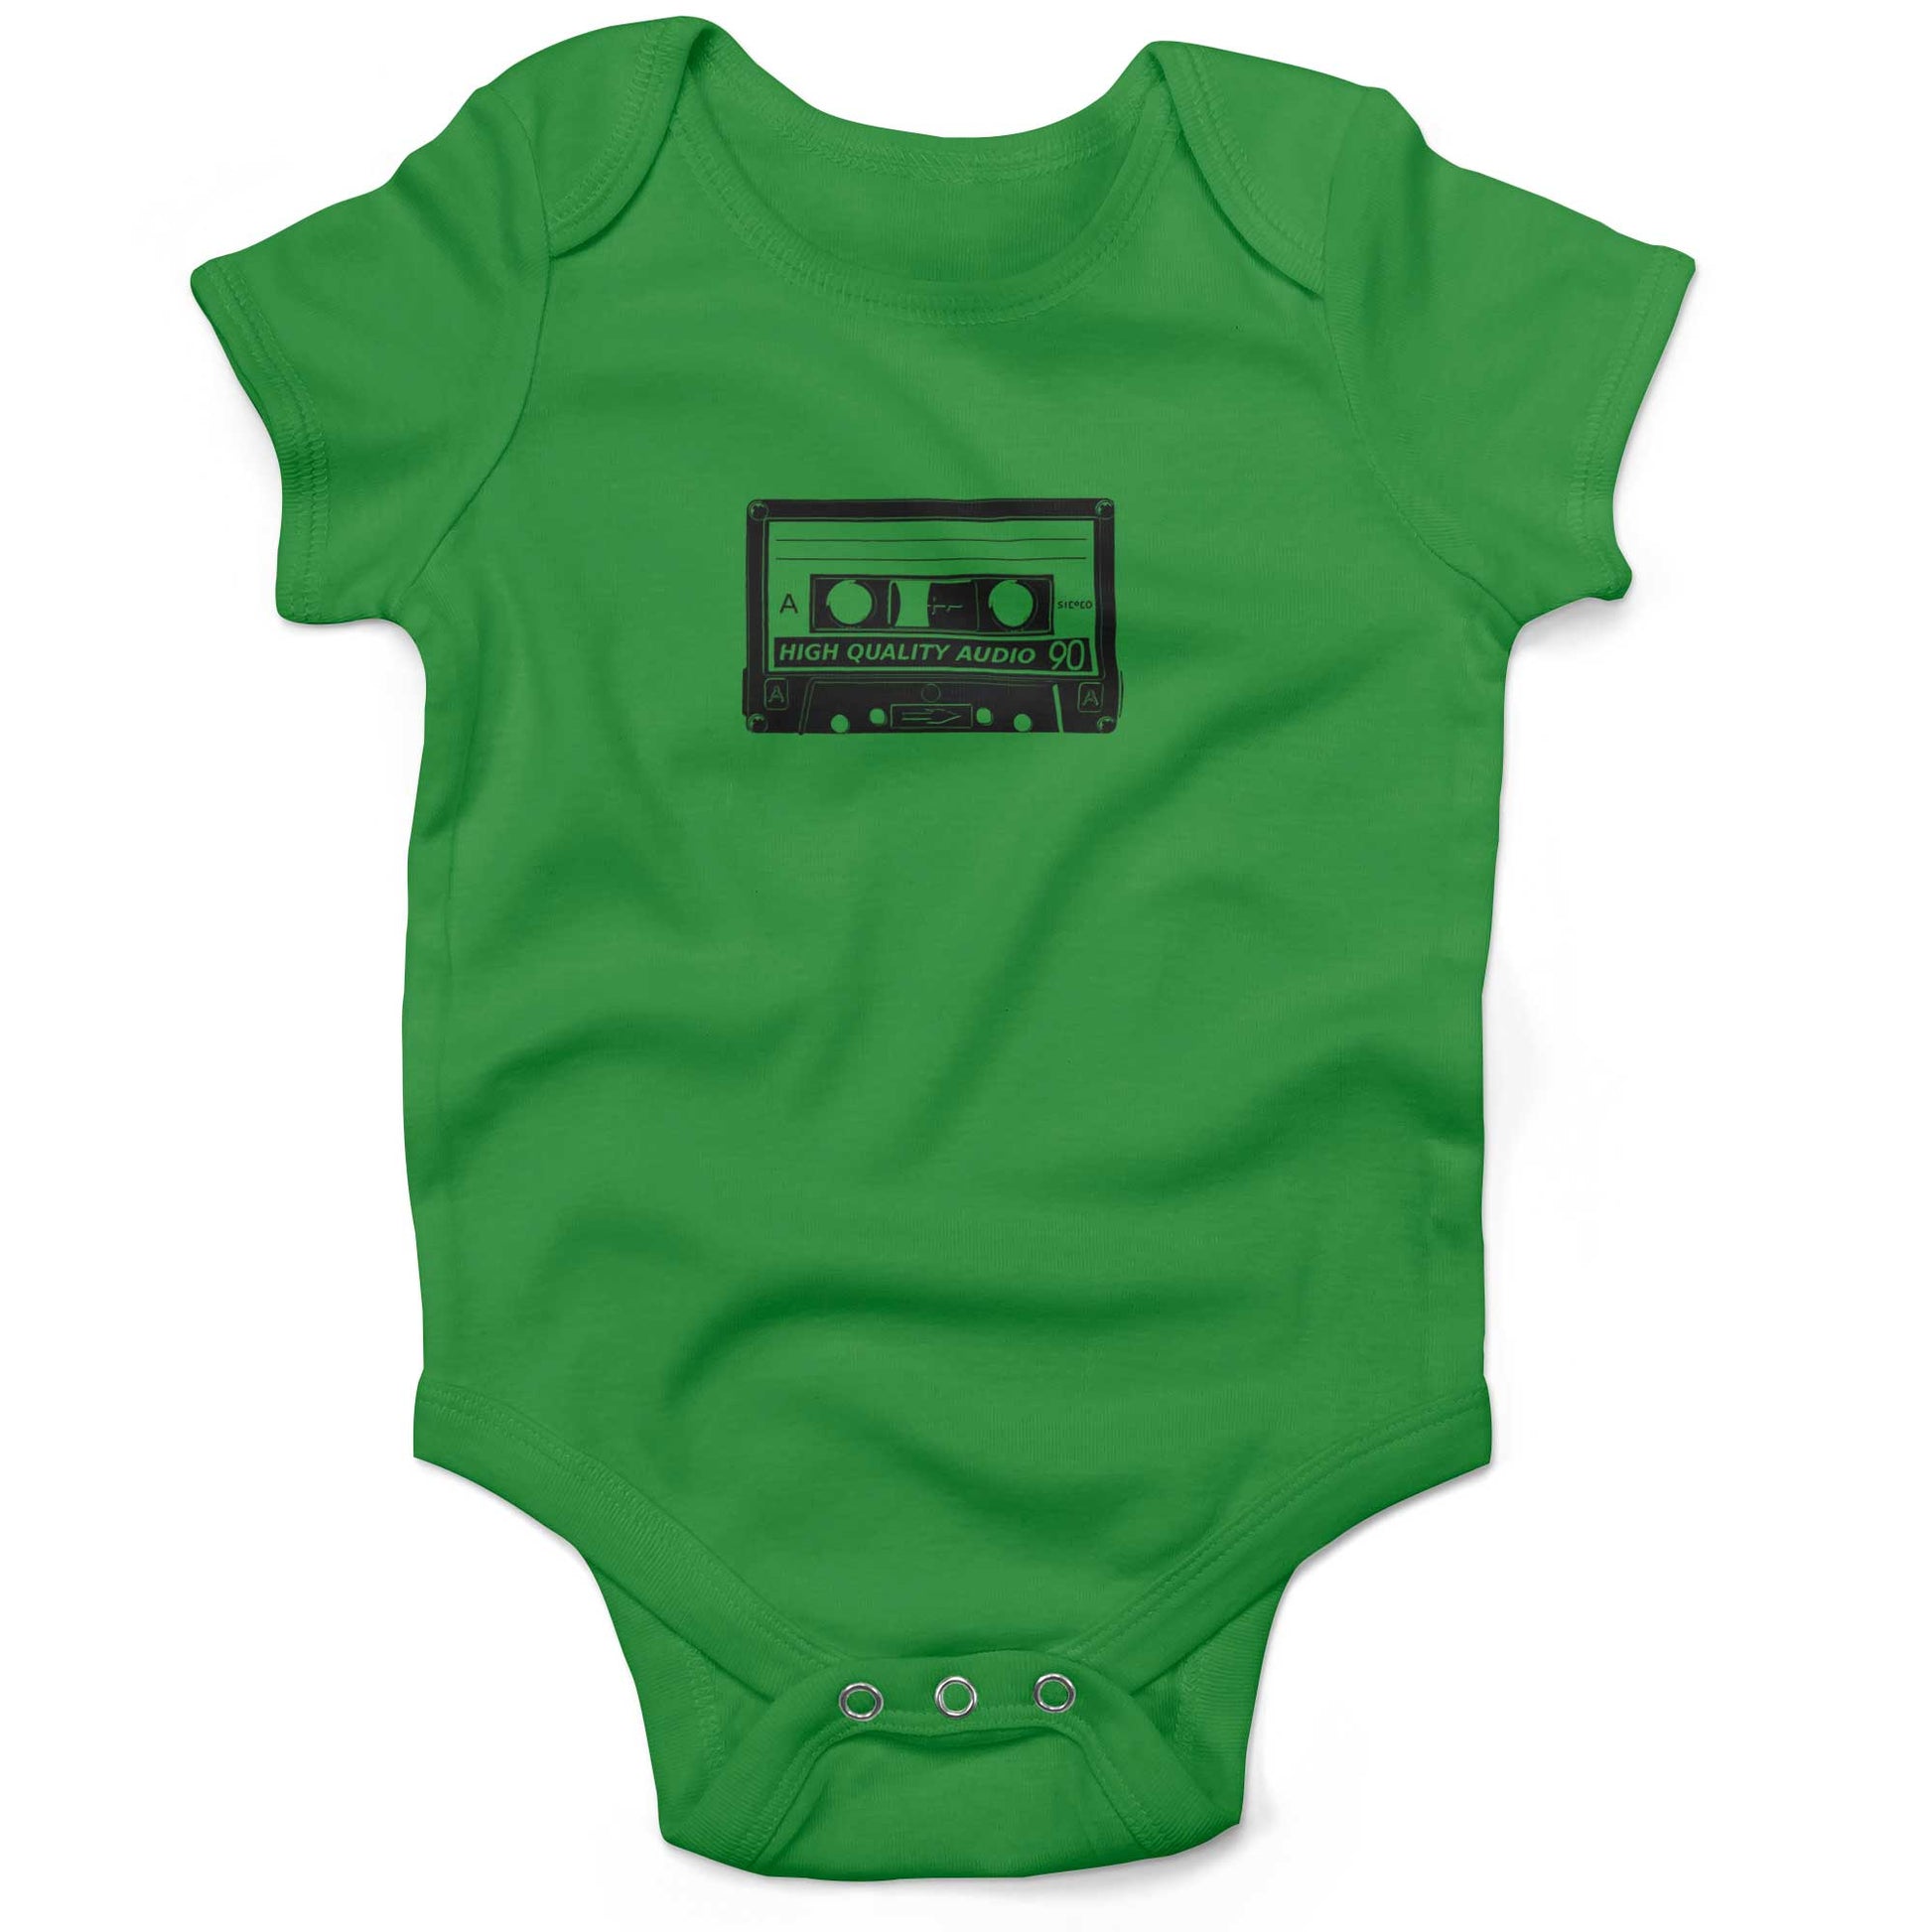 Cassette Tape Infant Bodysuit or Raglan Baby Tee-Grass Green-3-6 months